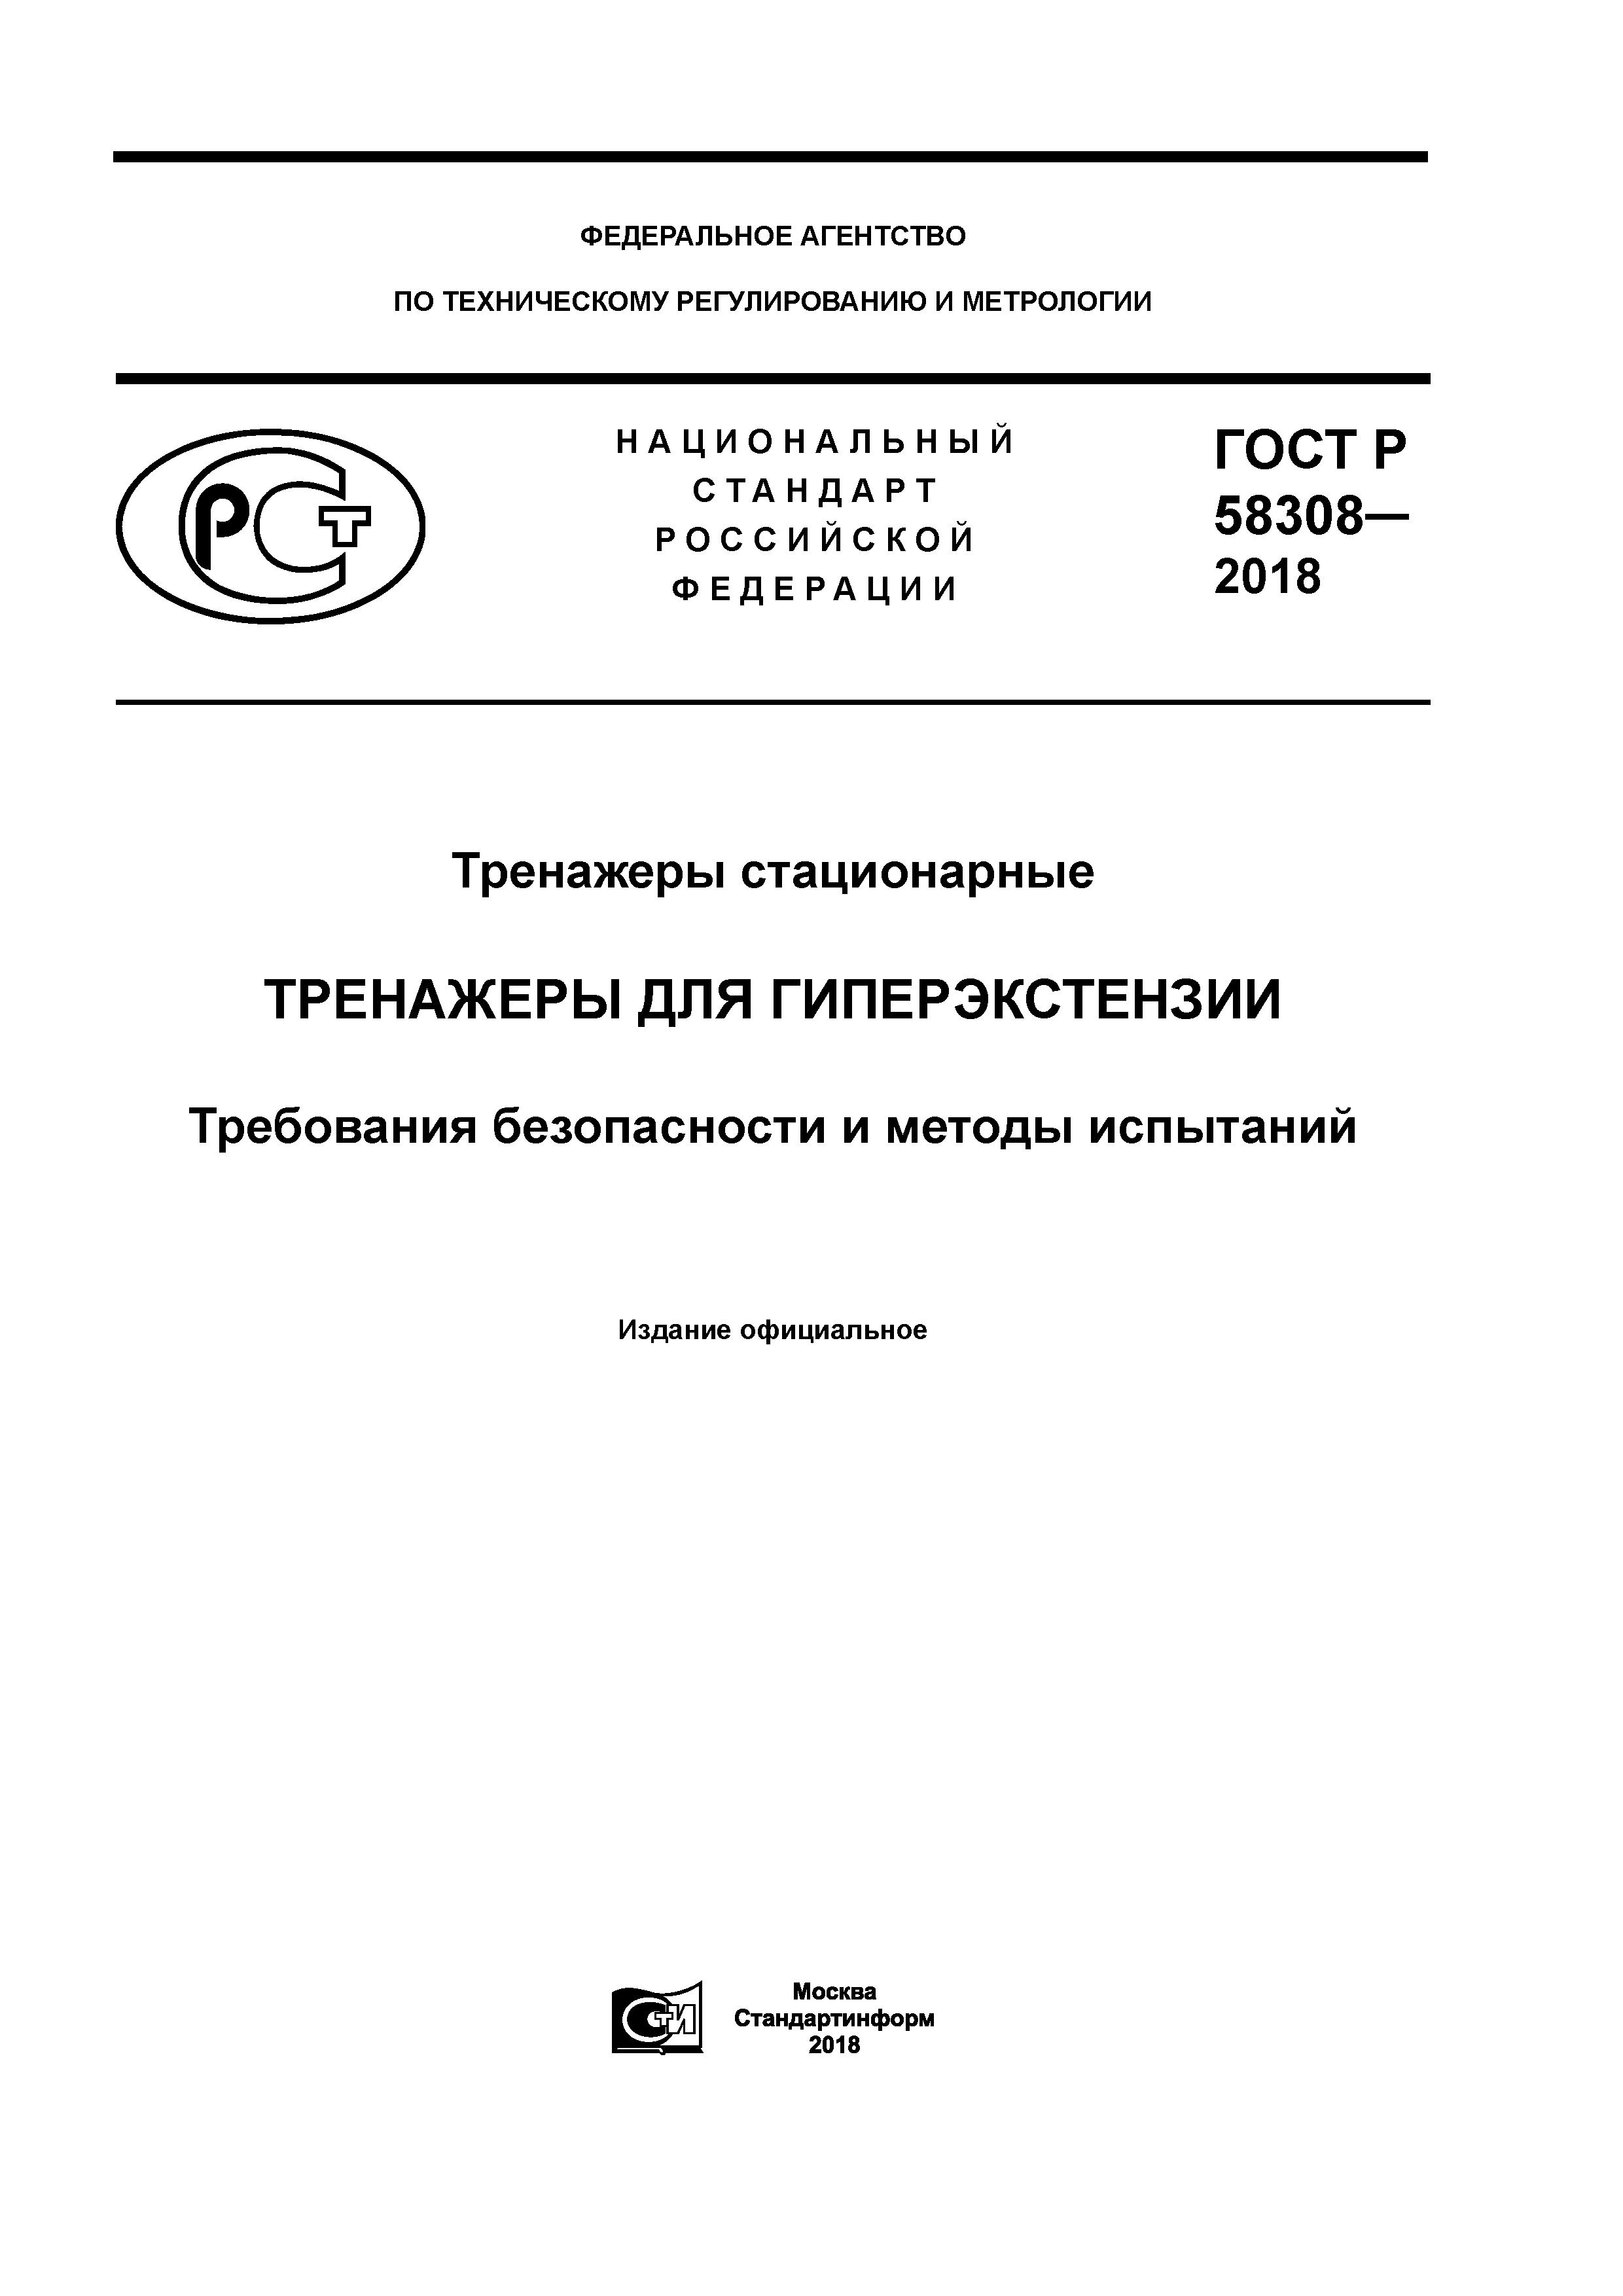 ГОСТ Р 58308-2018